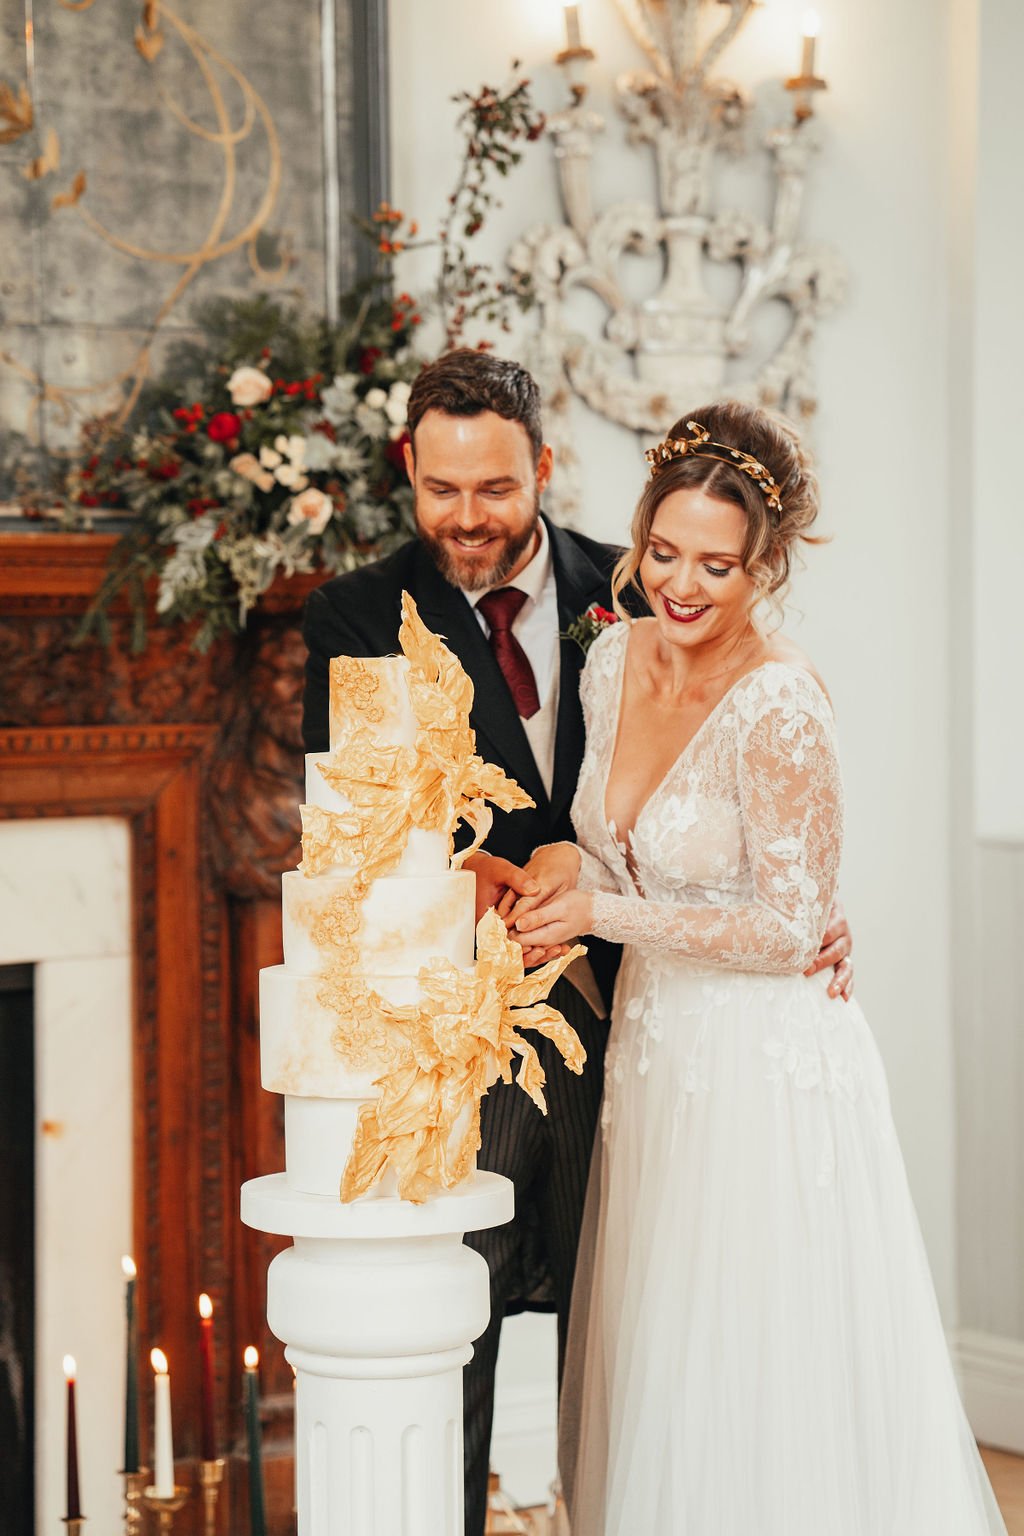 Couple cutting a gold wedding cake